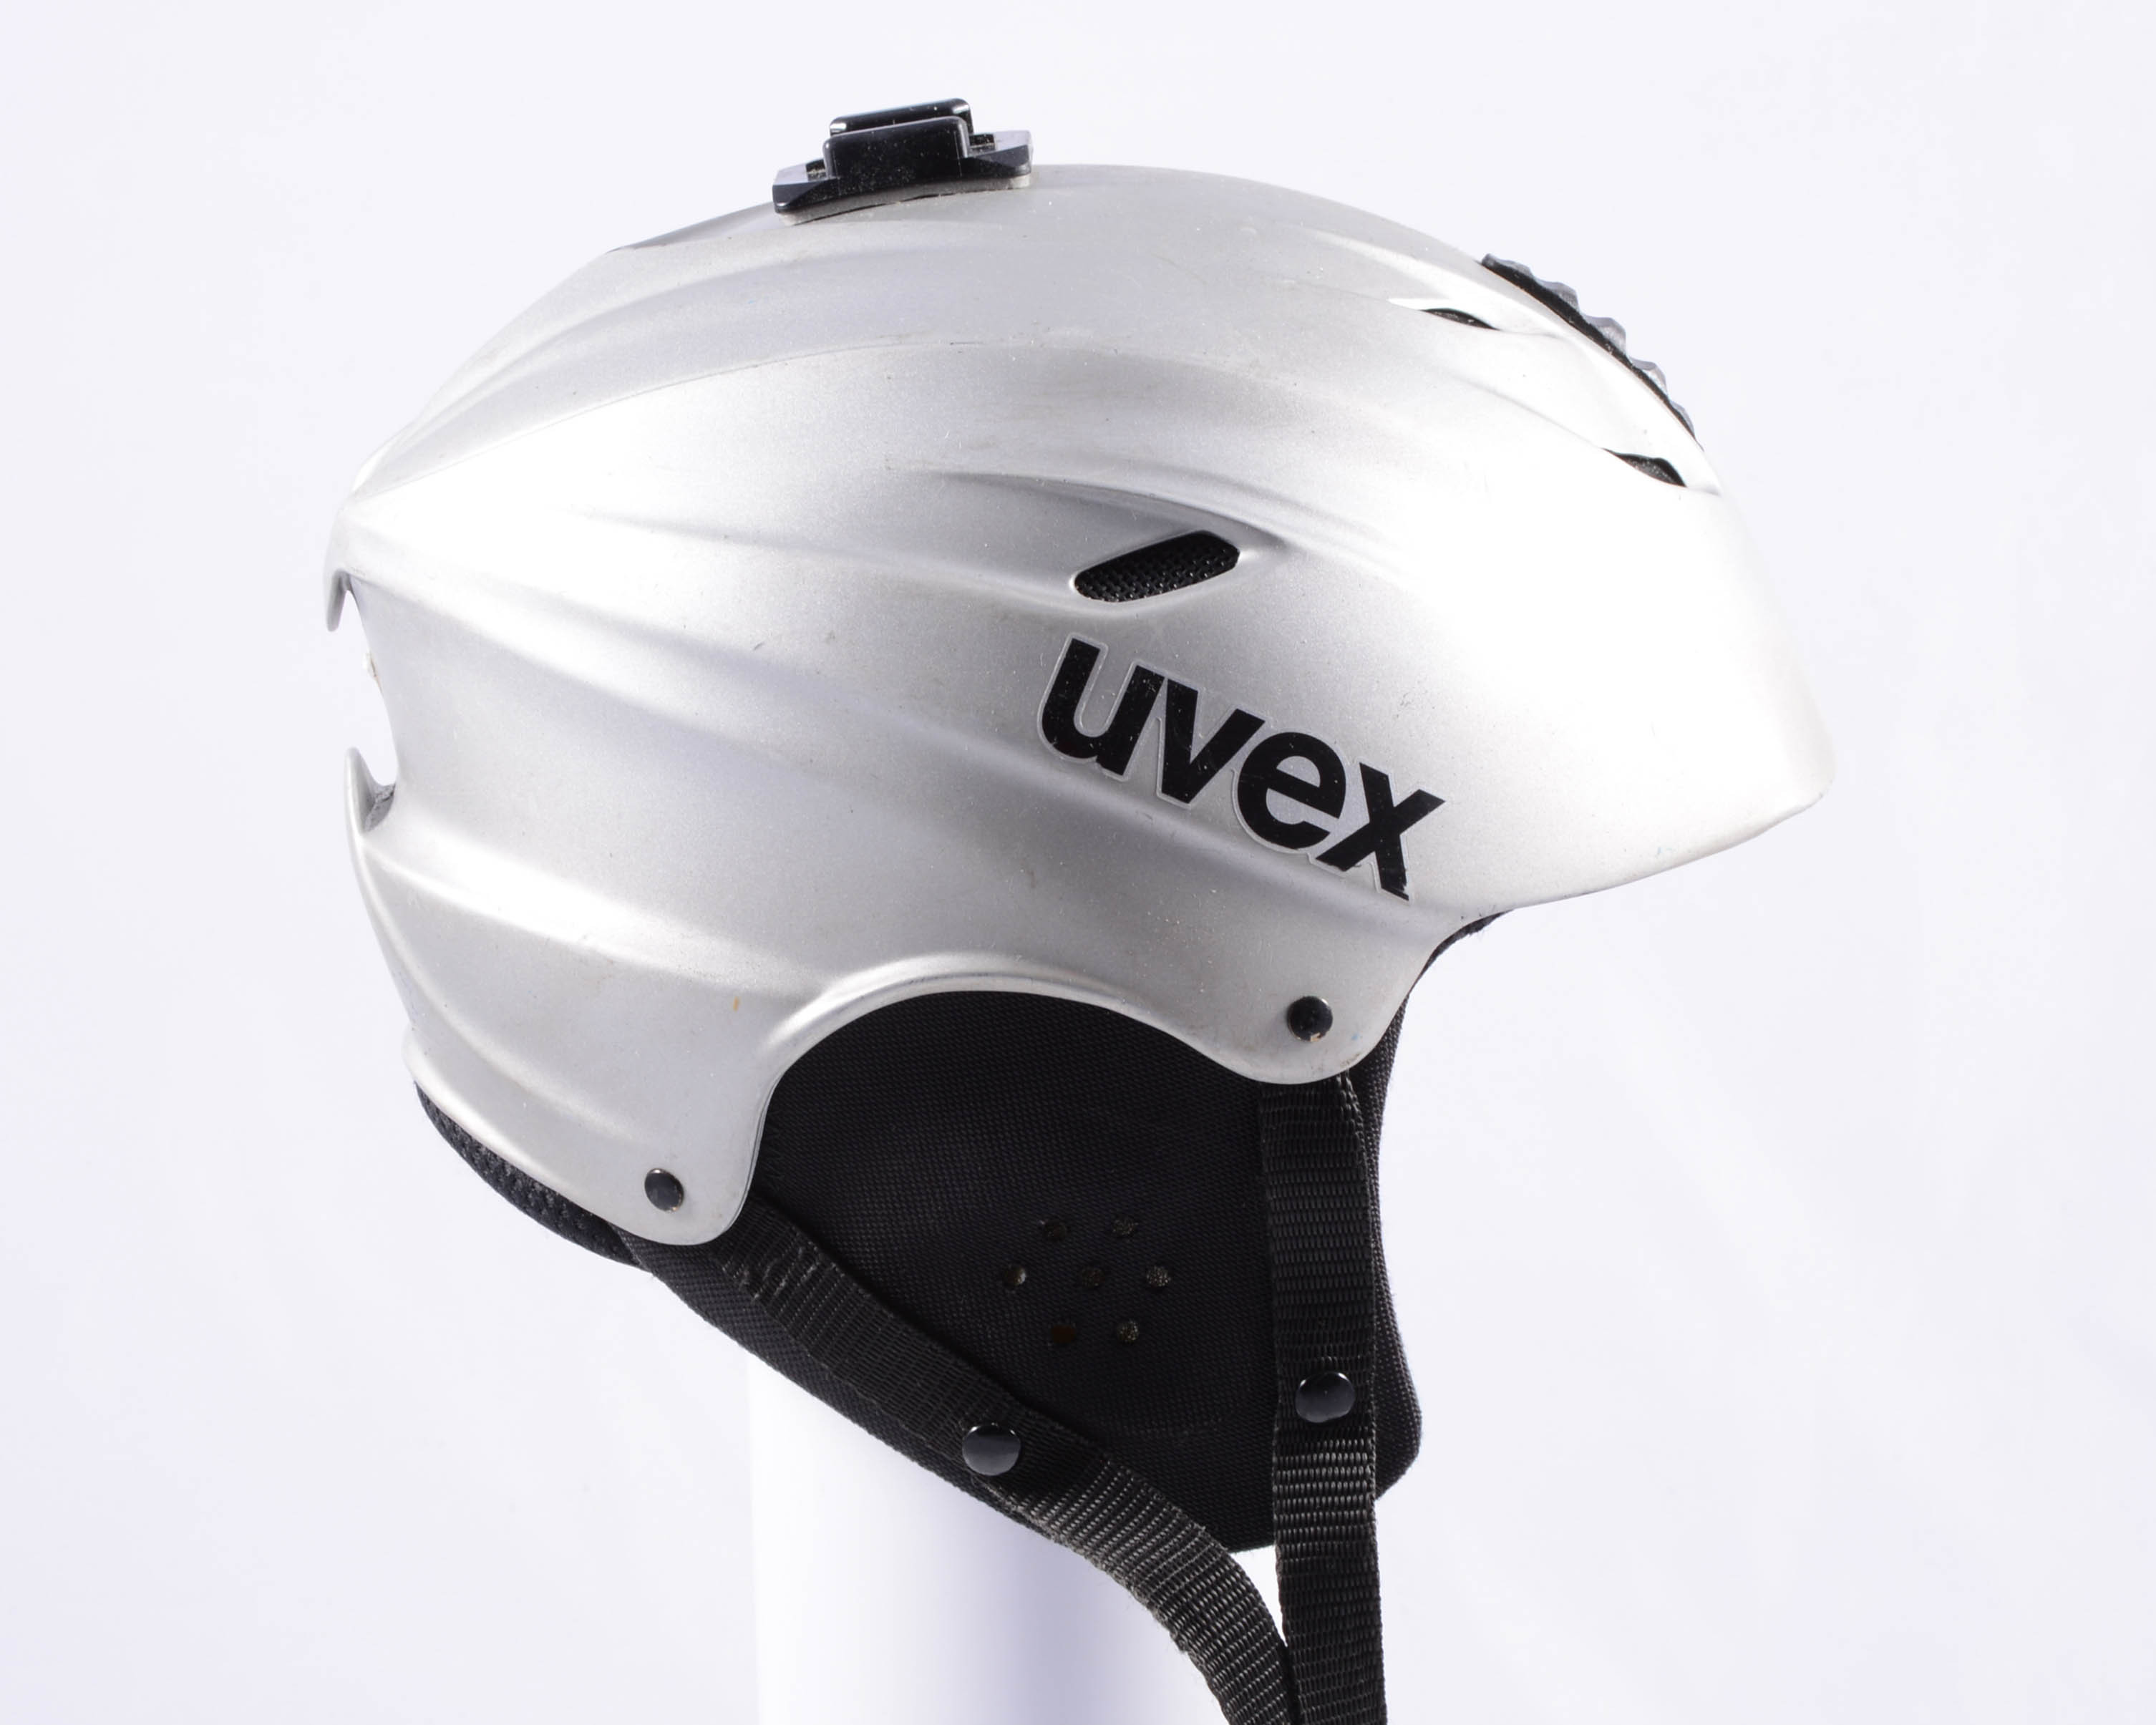 Aas barst Zonder ski/snowboard helmet UVEX Silver/black - Mardosport.com